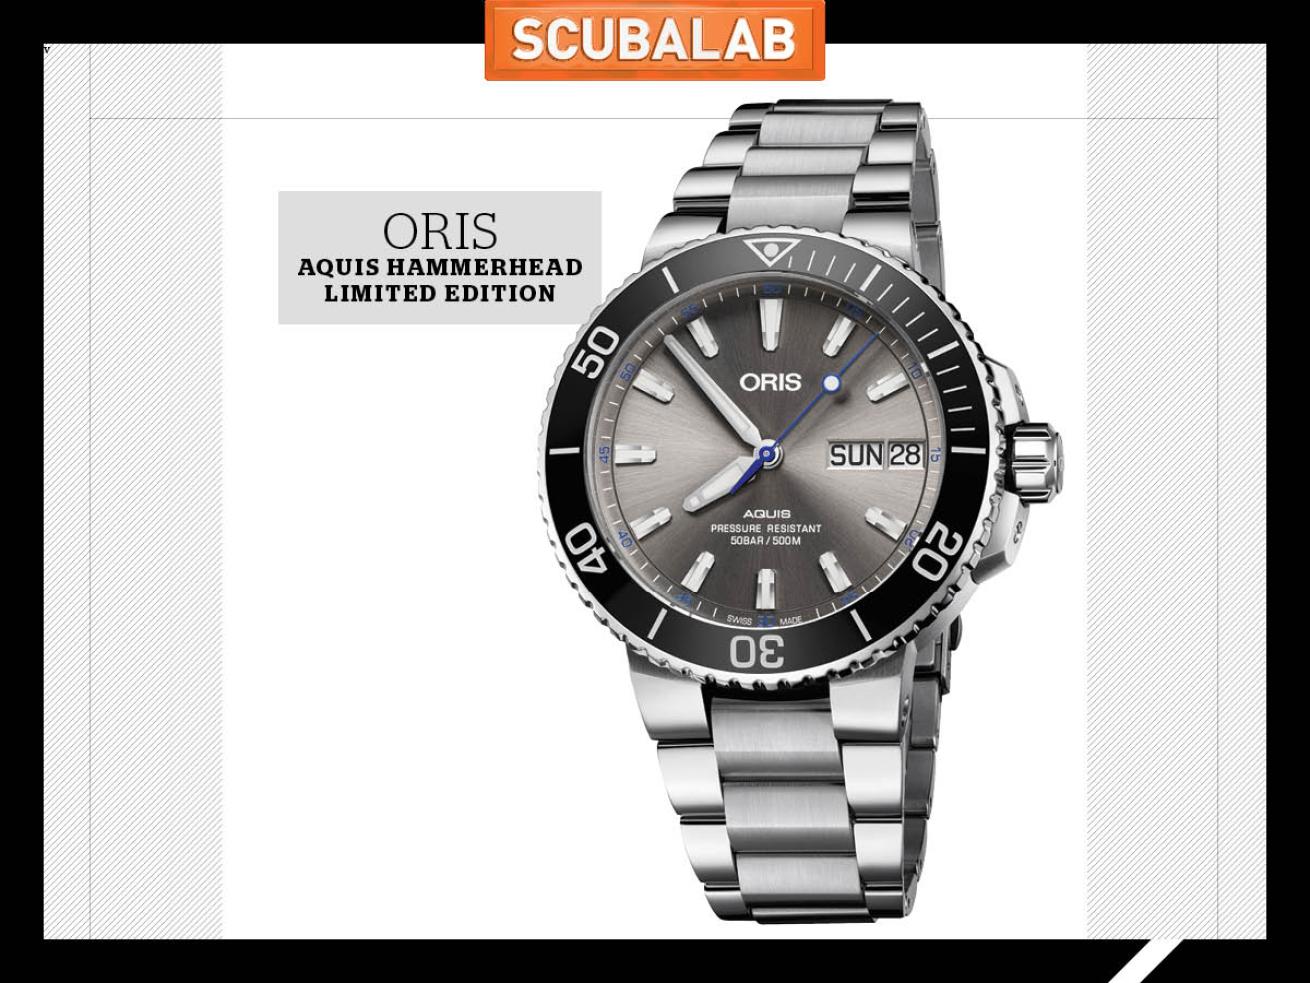 Oris Aquis Hammerhead Limited Edition dive watch